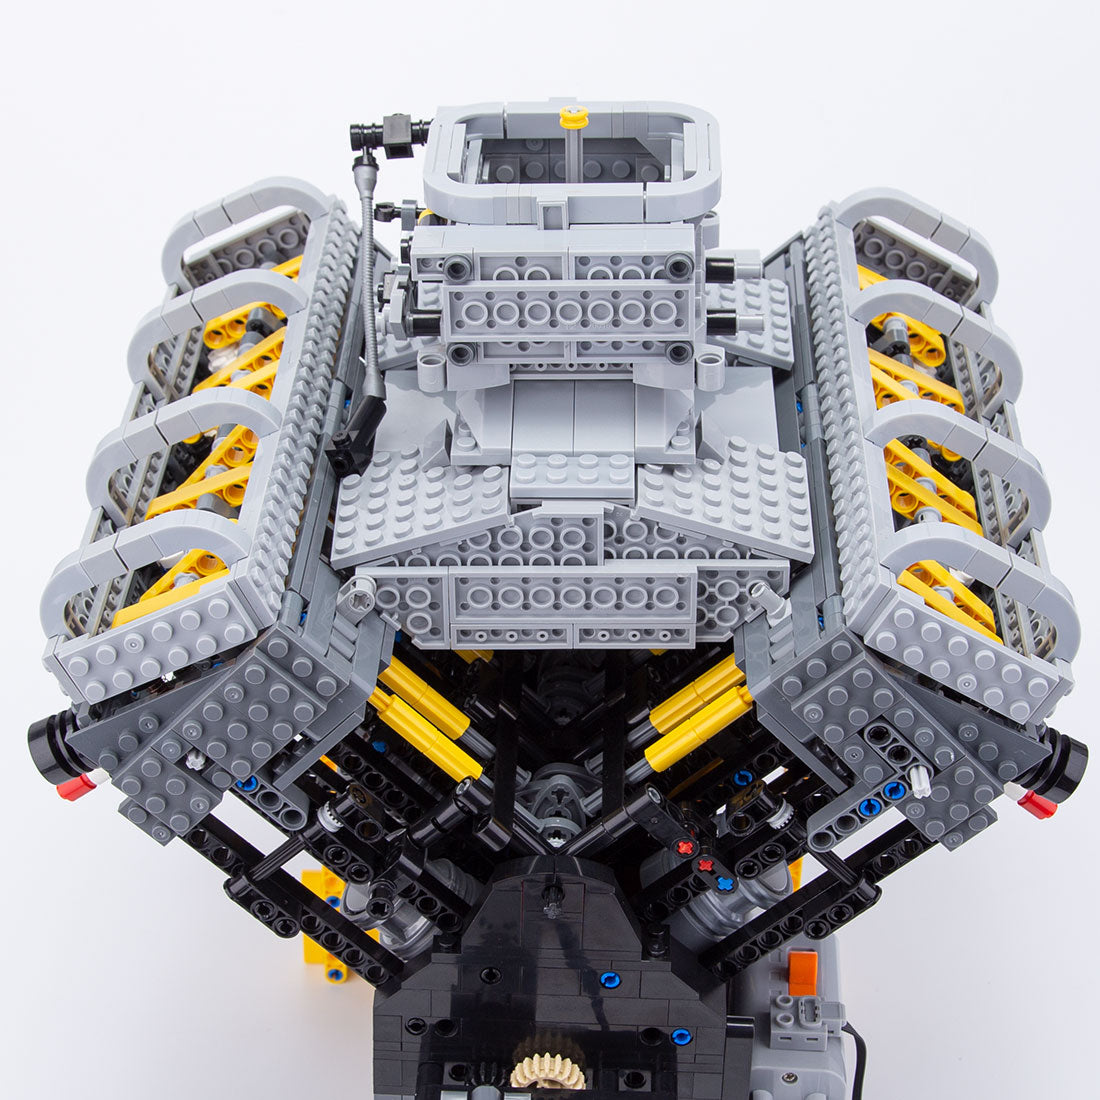 CHEVY Small Block  V8 Engine General Motors MOC Engine Model Building Blocks Toy Set - 2362PCS - Build Your Own V8 Engine enginediyshop